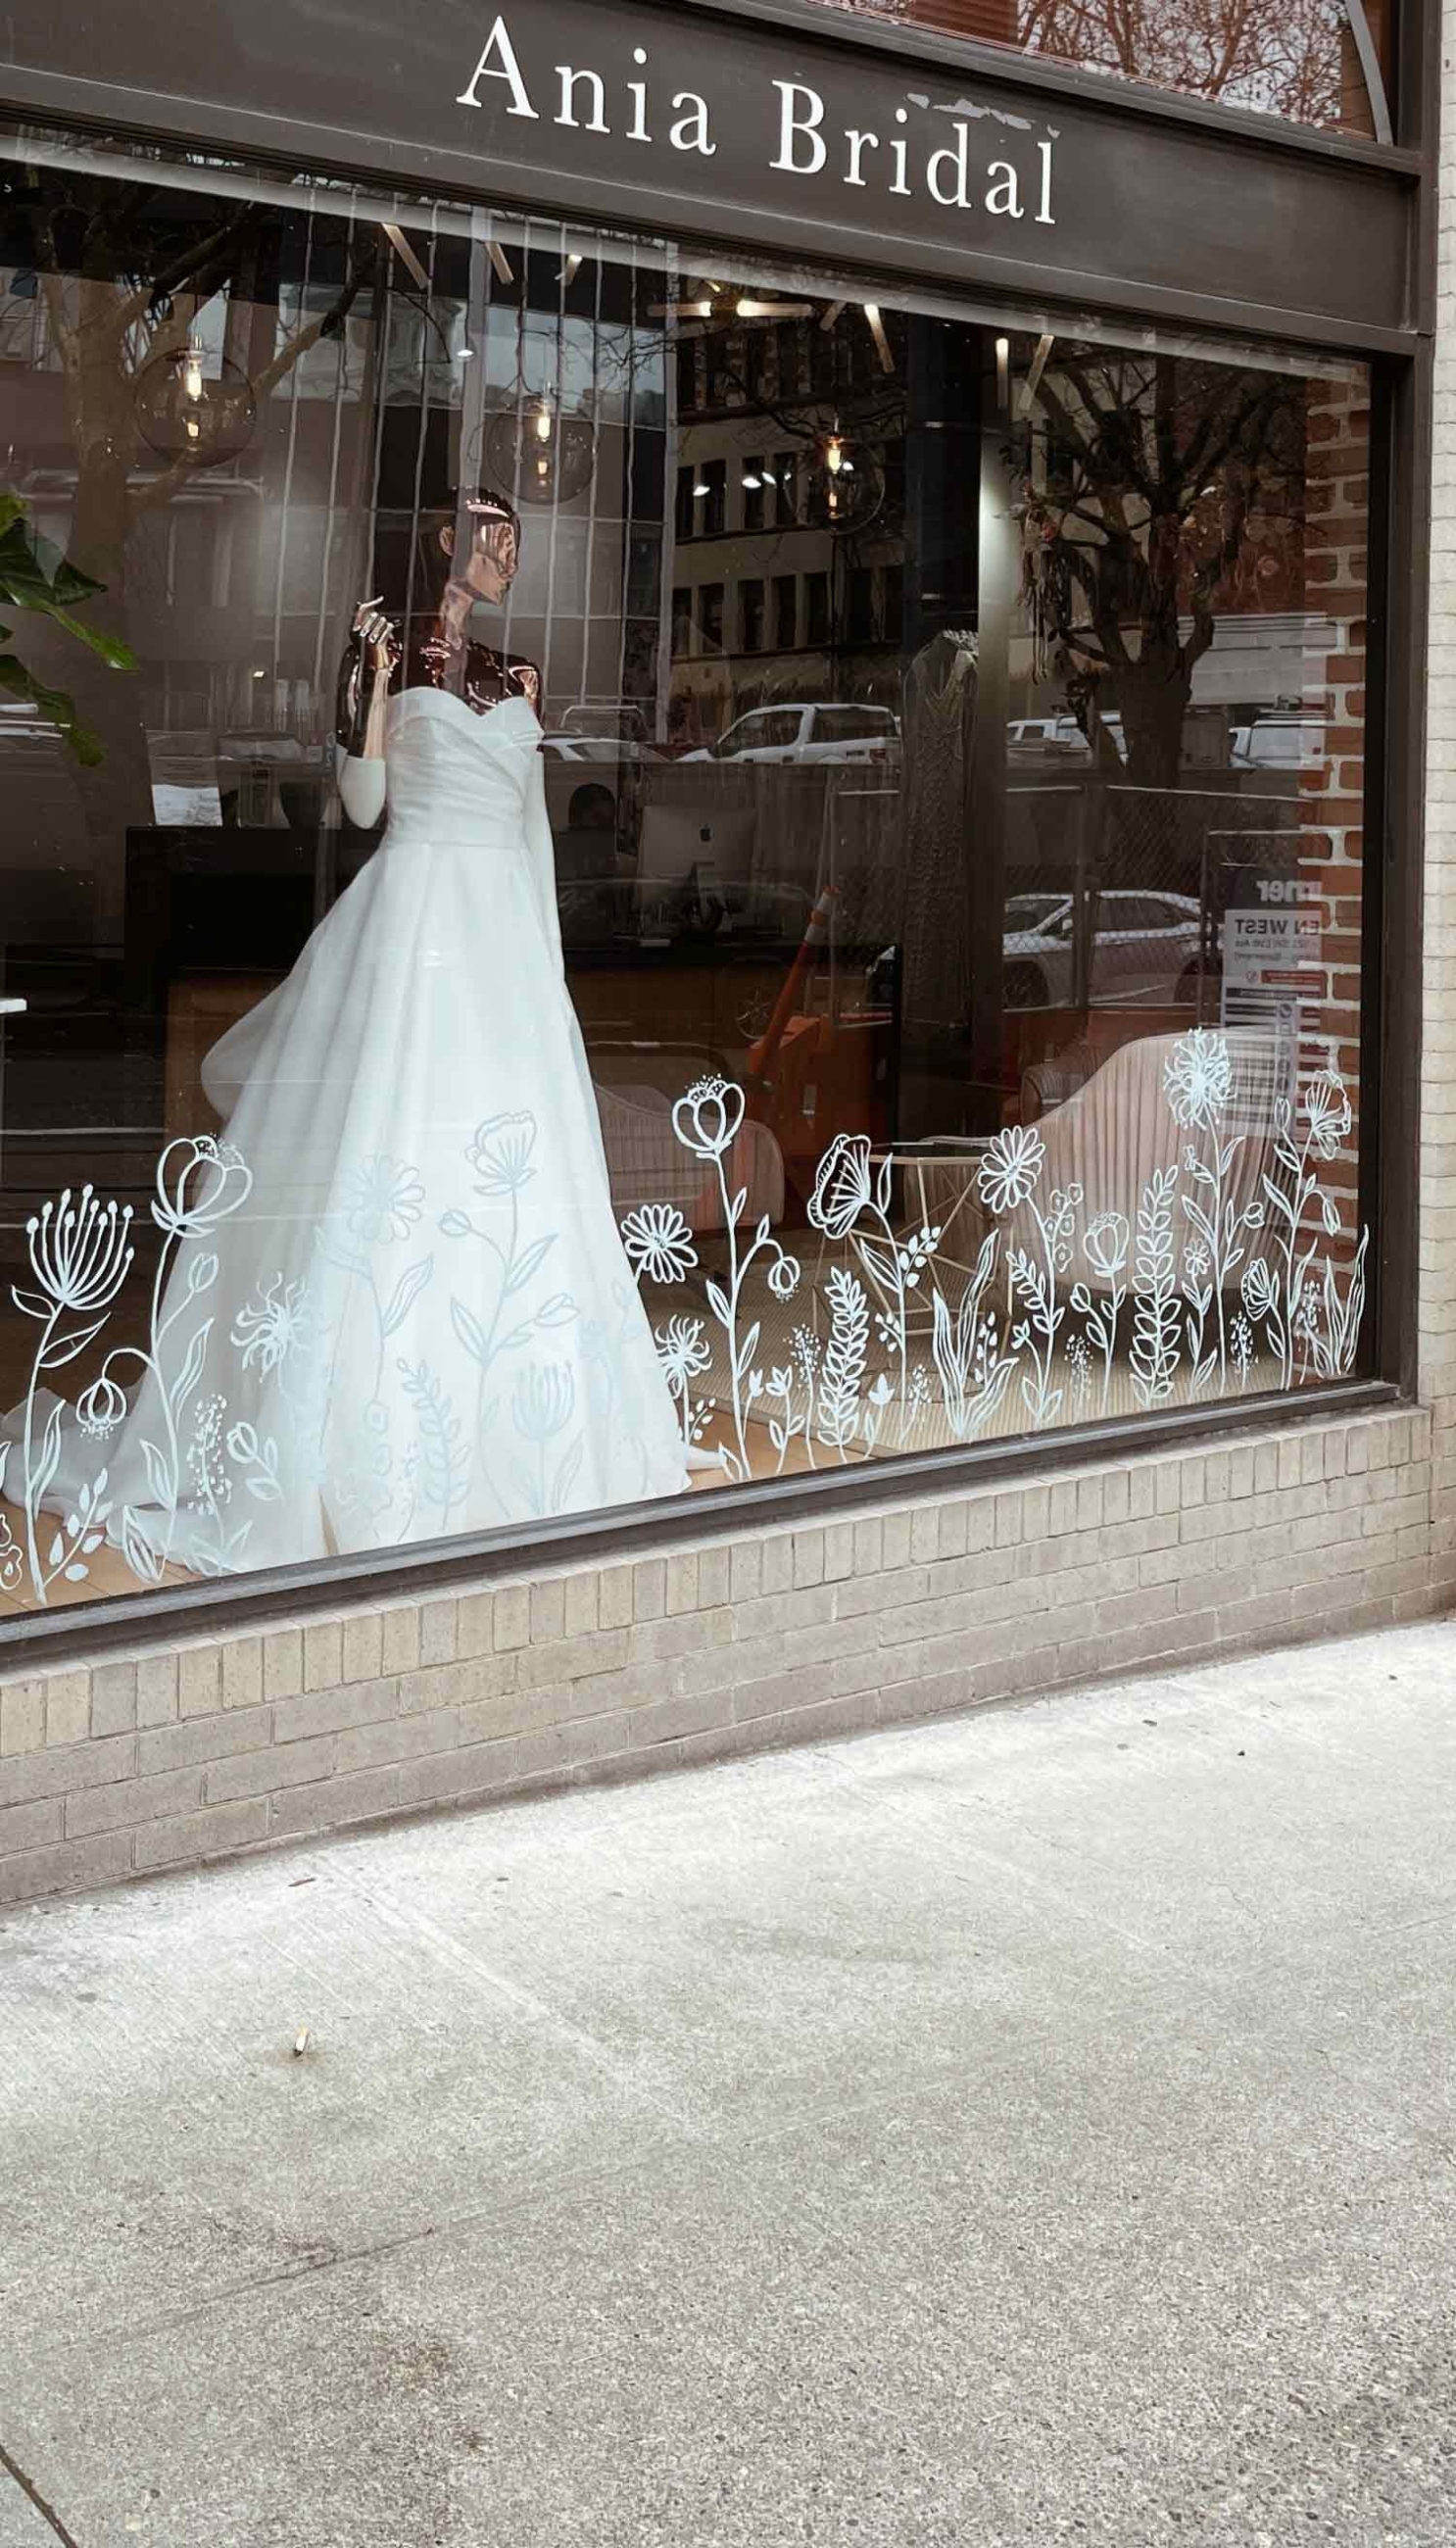 Ania Bridal store. Mobile image